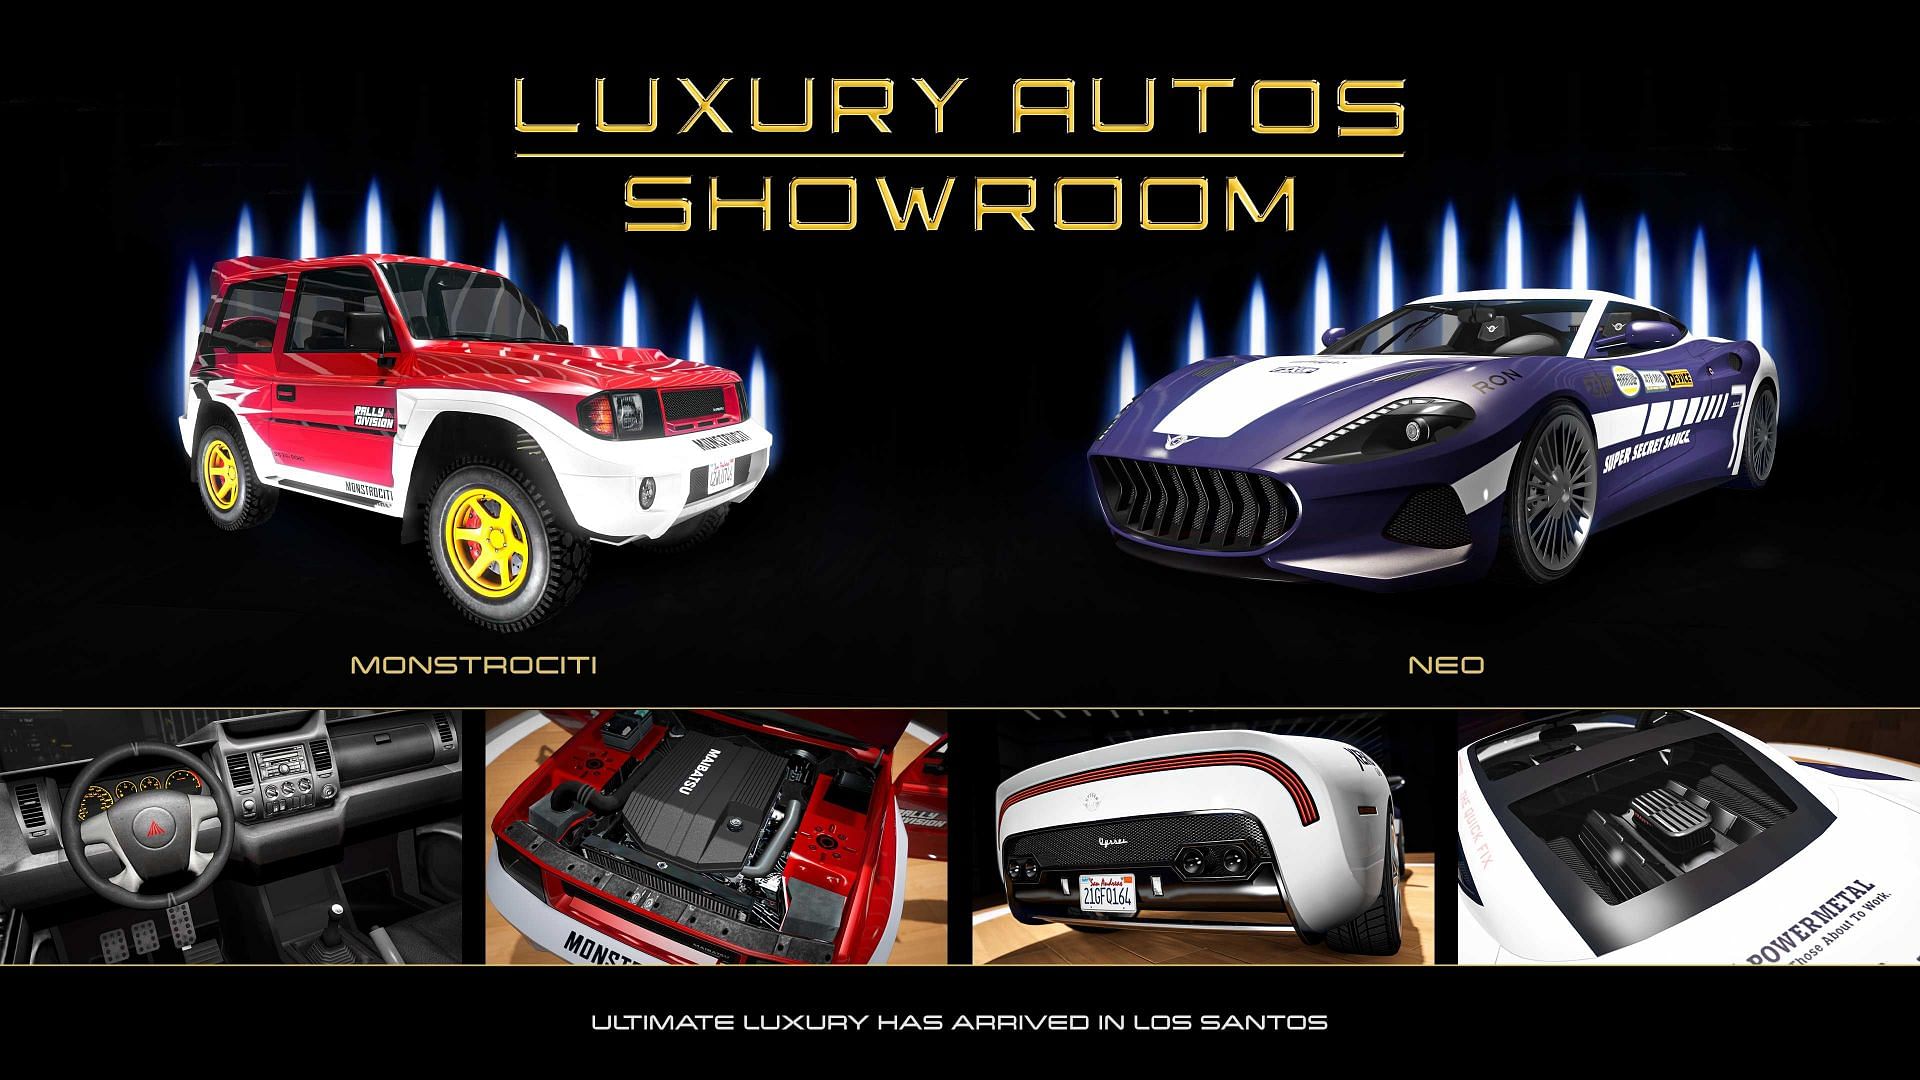 The Vysser Neo was purchasable through Luxury Autos Showroom (Image via Rockstar Games)